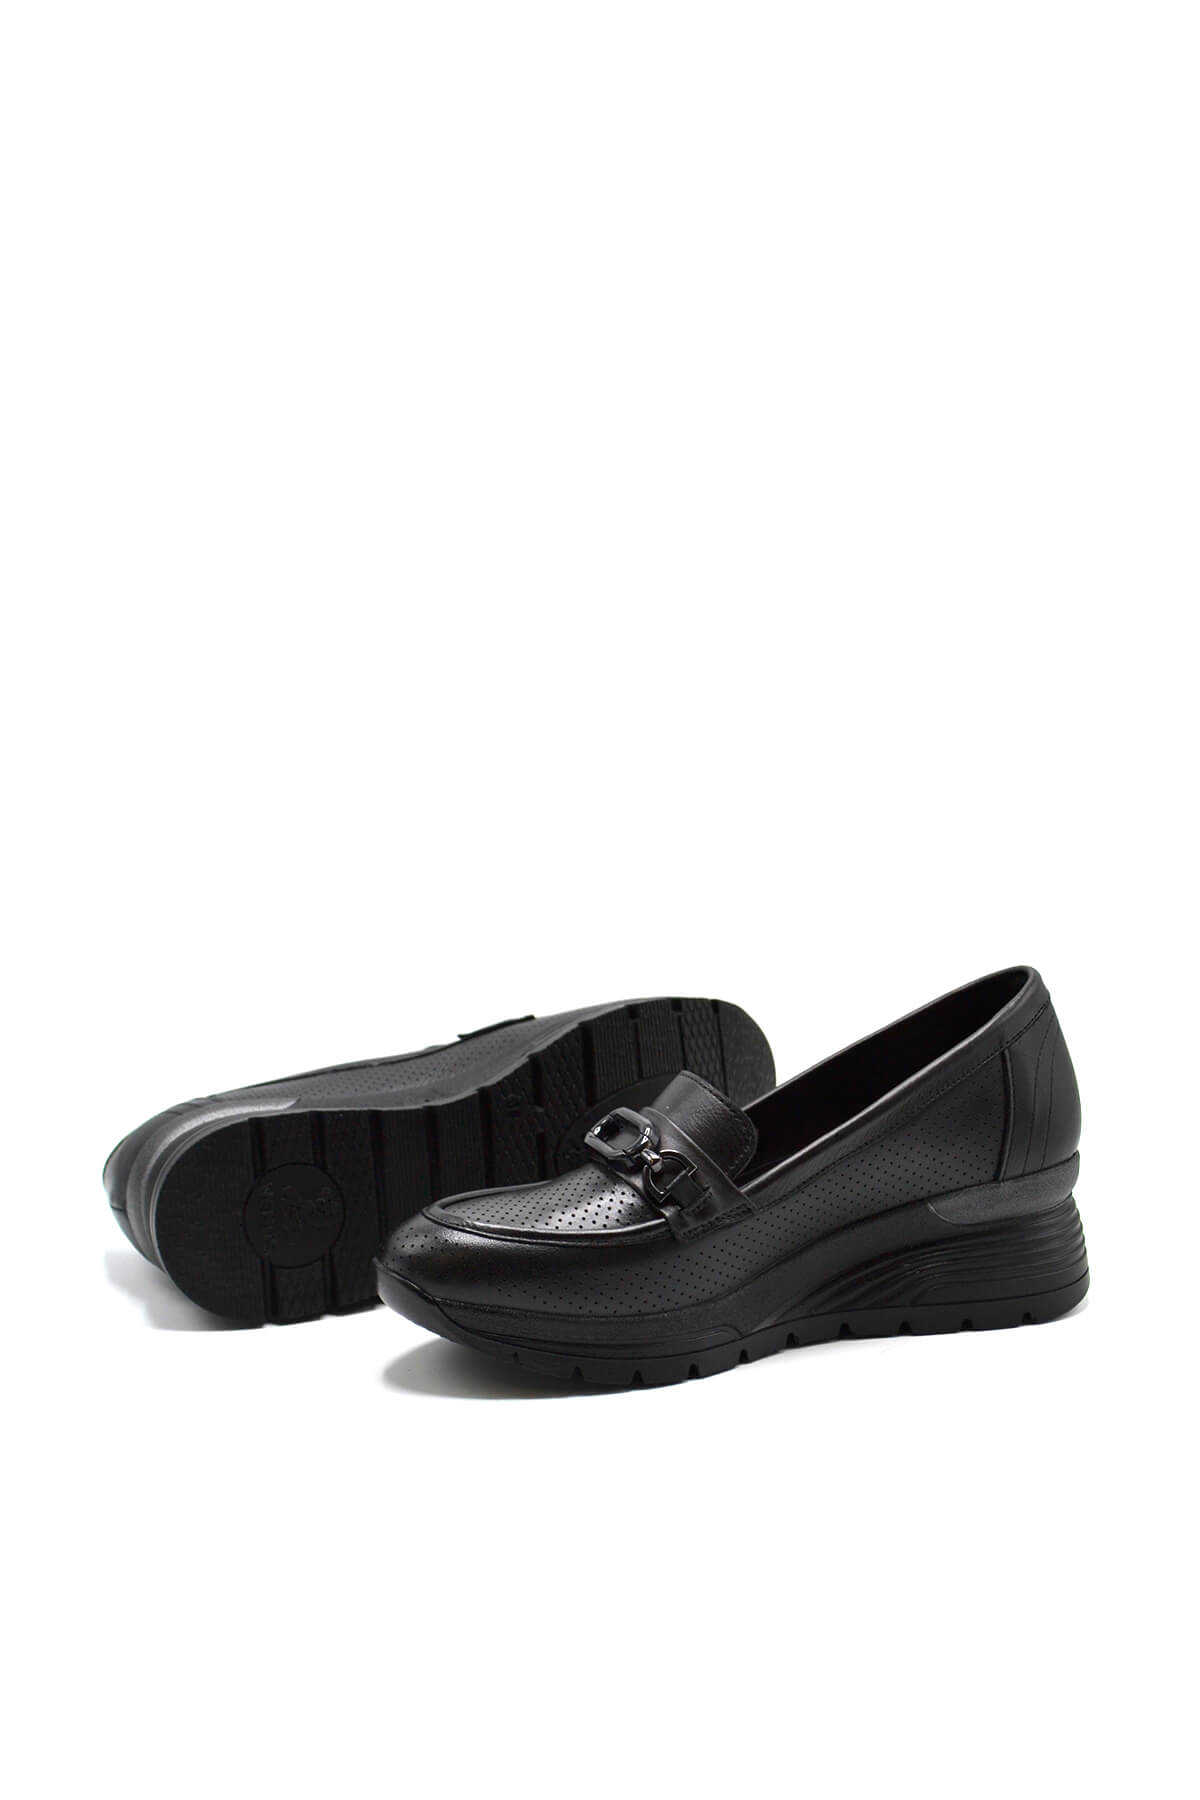 Kadın Airflow Deri Ayakkabı Siyah 2313001Y - Thumbnail